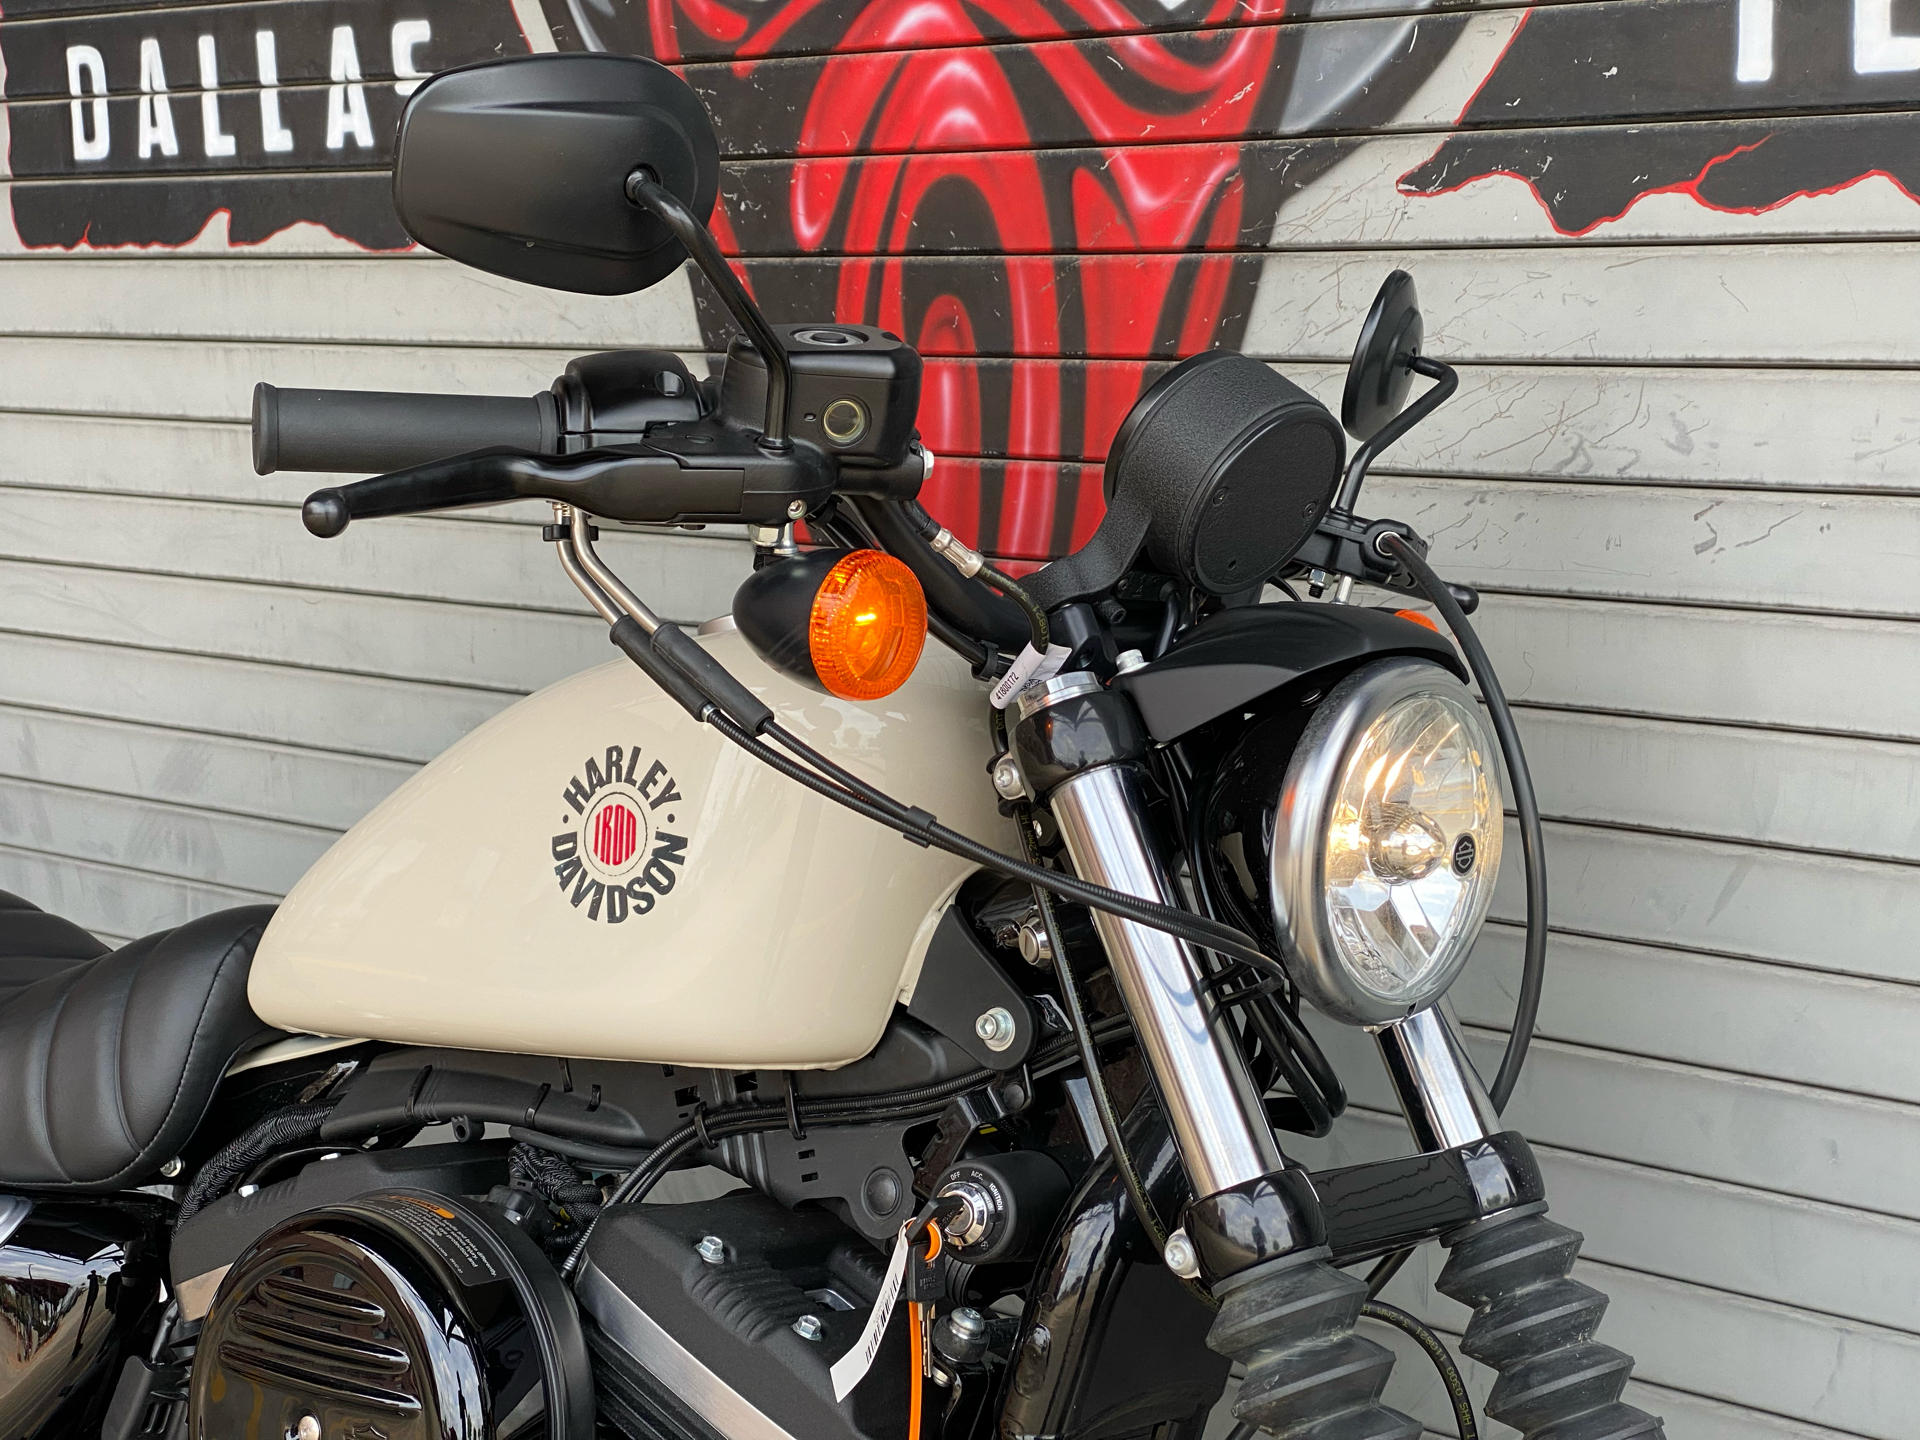 2022 Harley-Davidson Iron 883™ in Carrollton, Texas - Photo 2